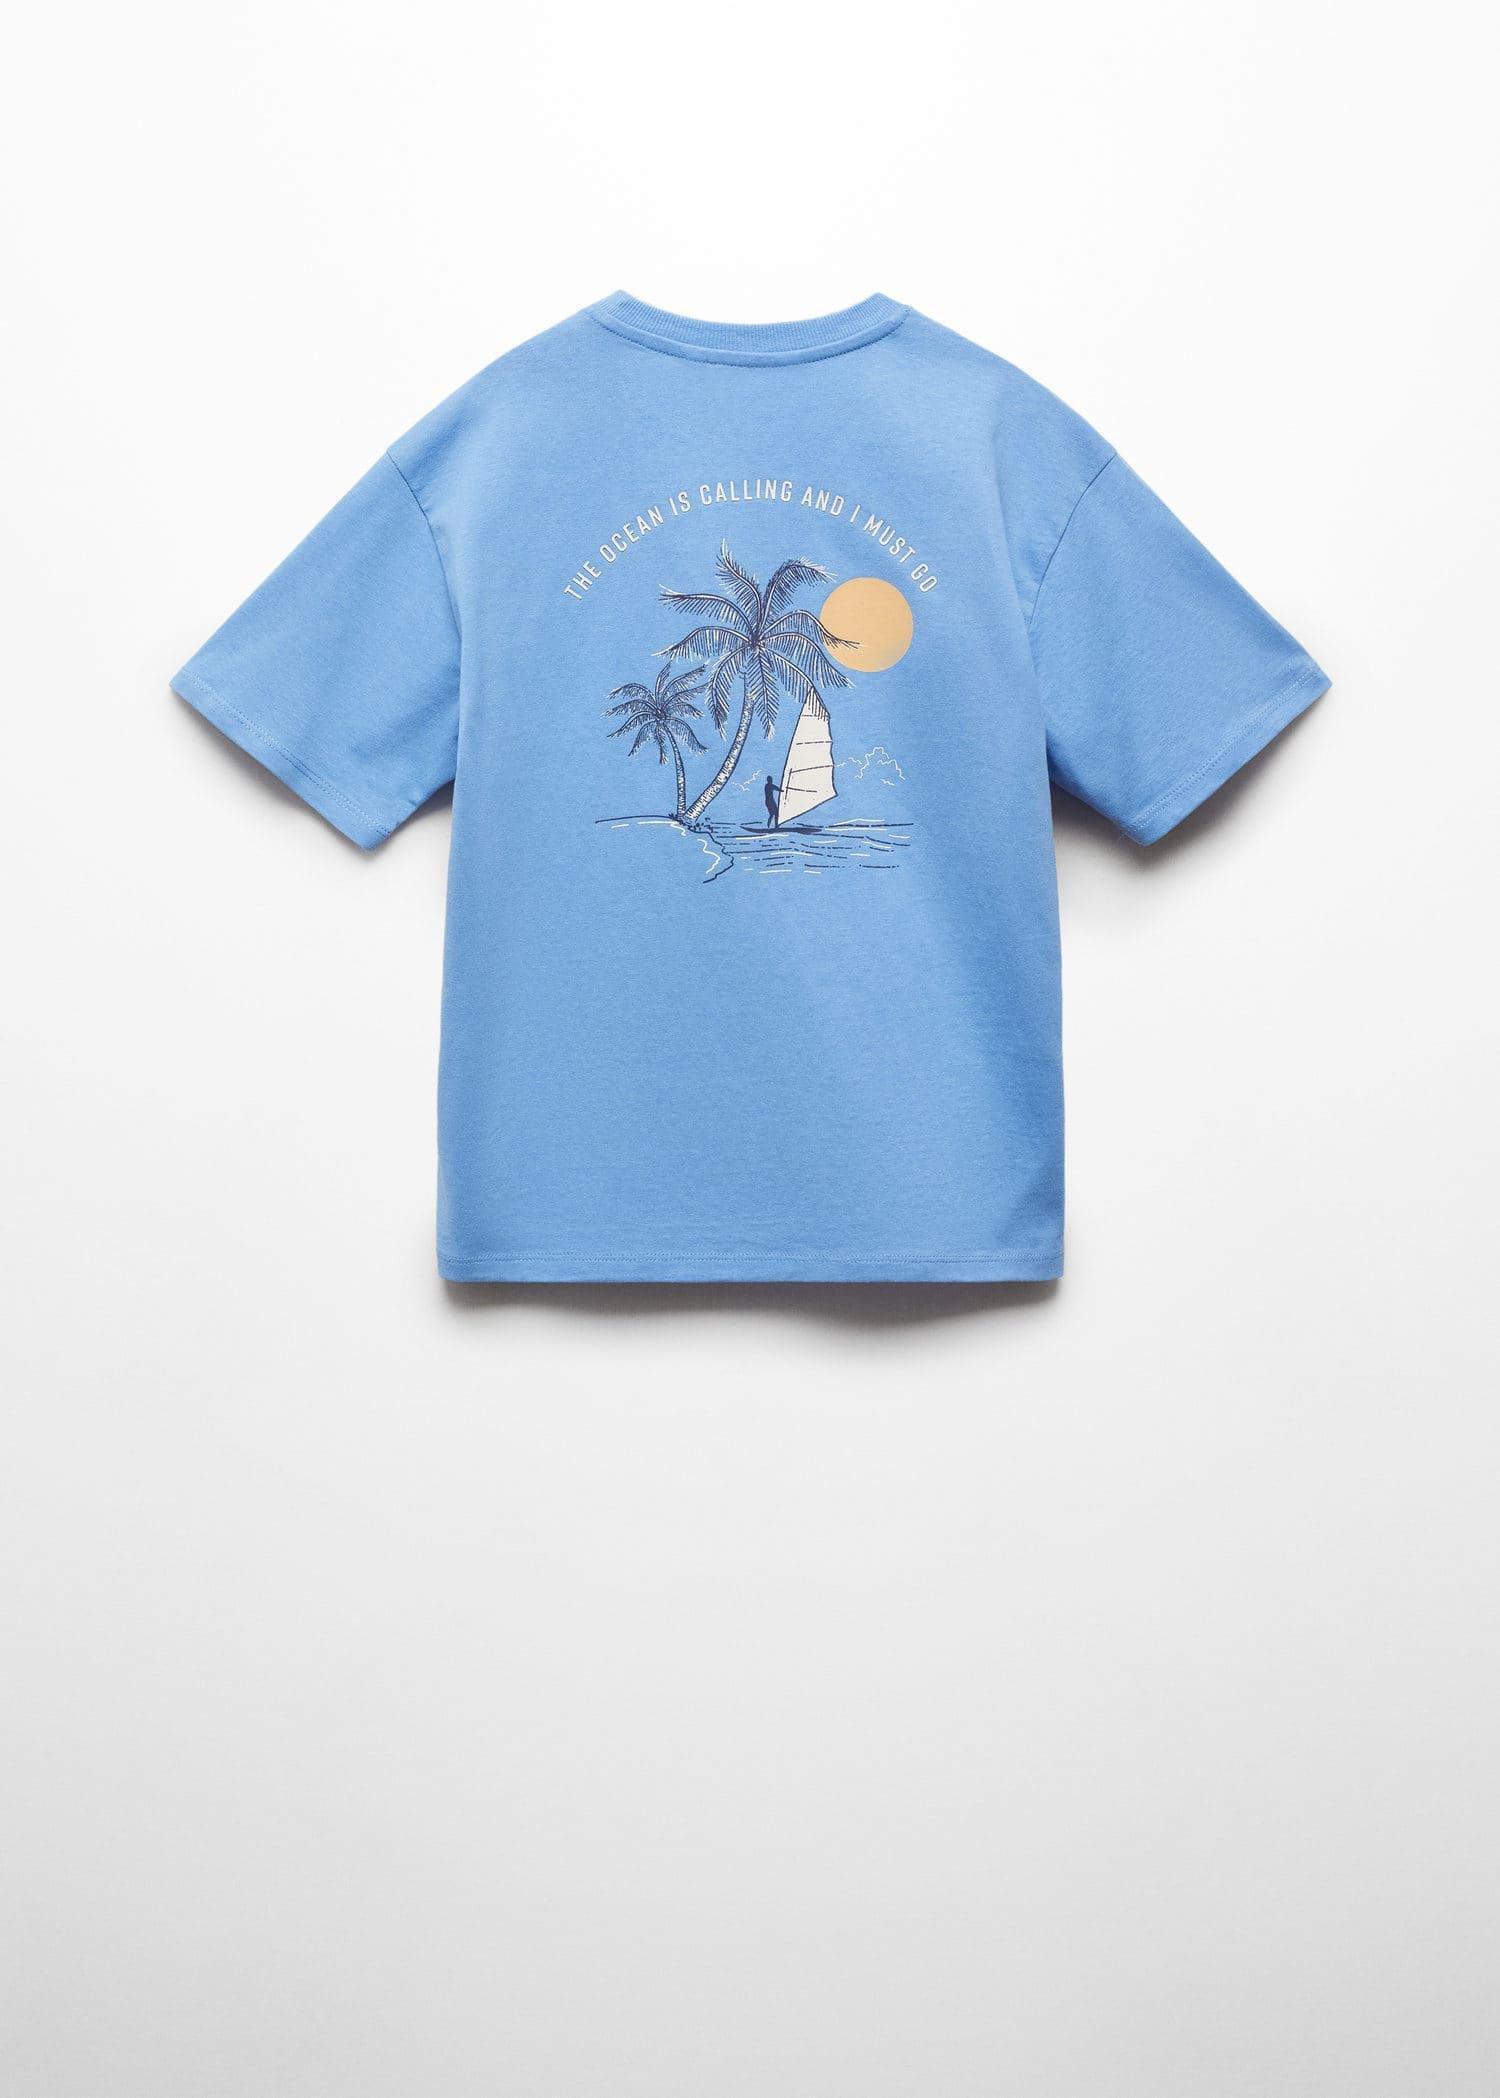 Mango - Blue Printed Cotton-Blend T-Shirt, Kids Boys